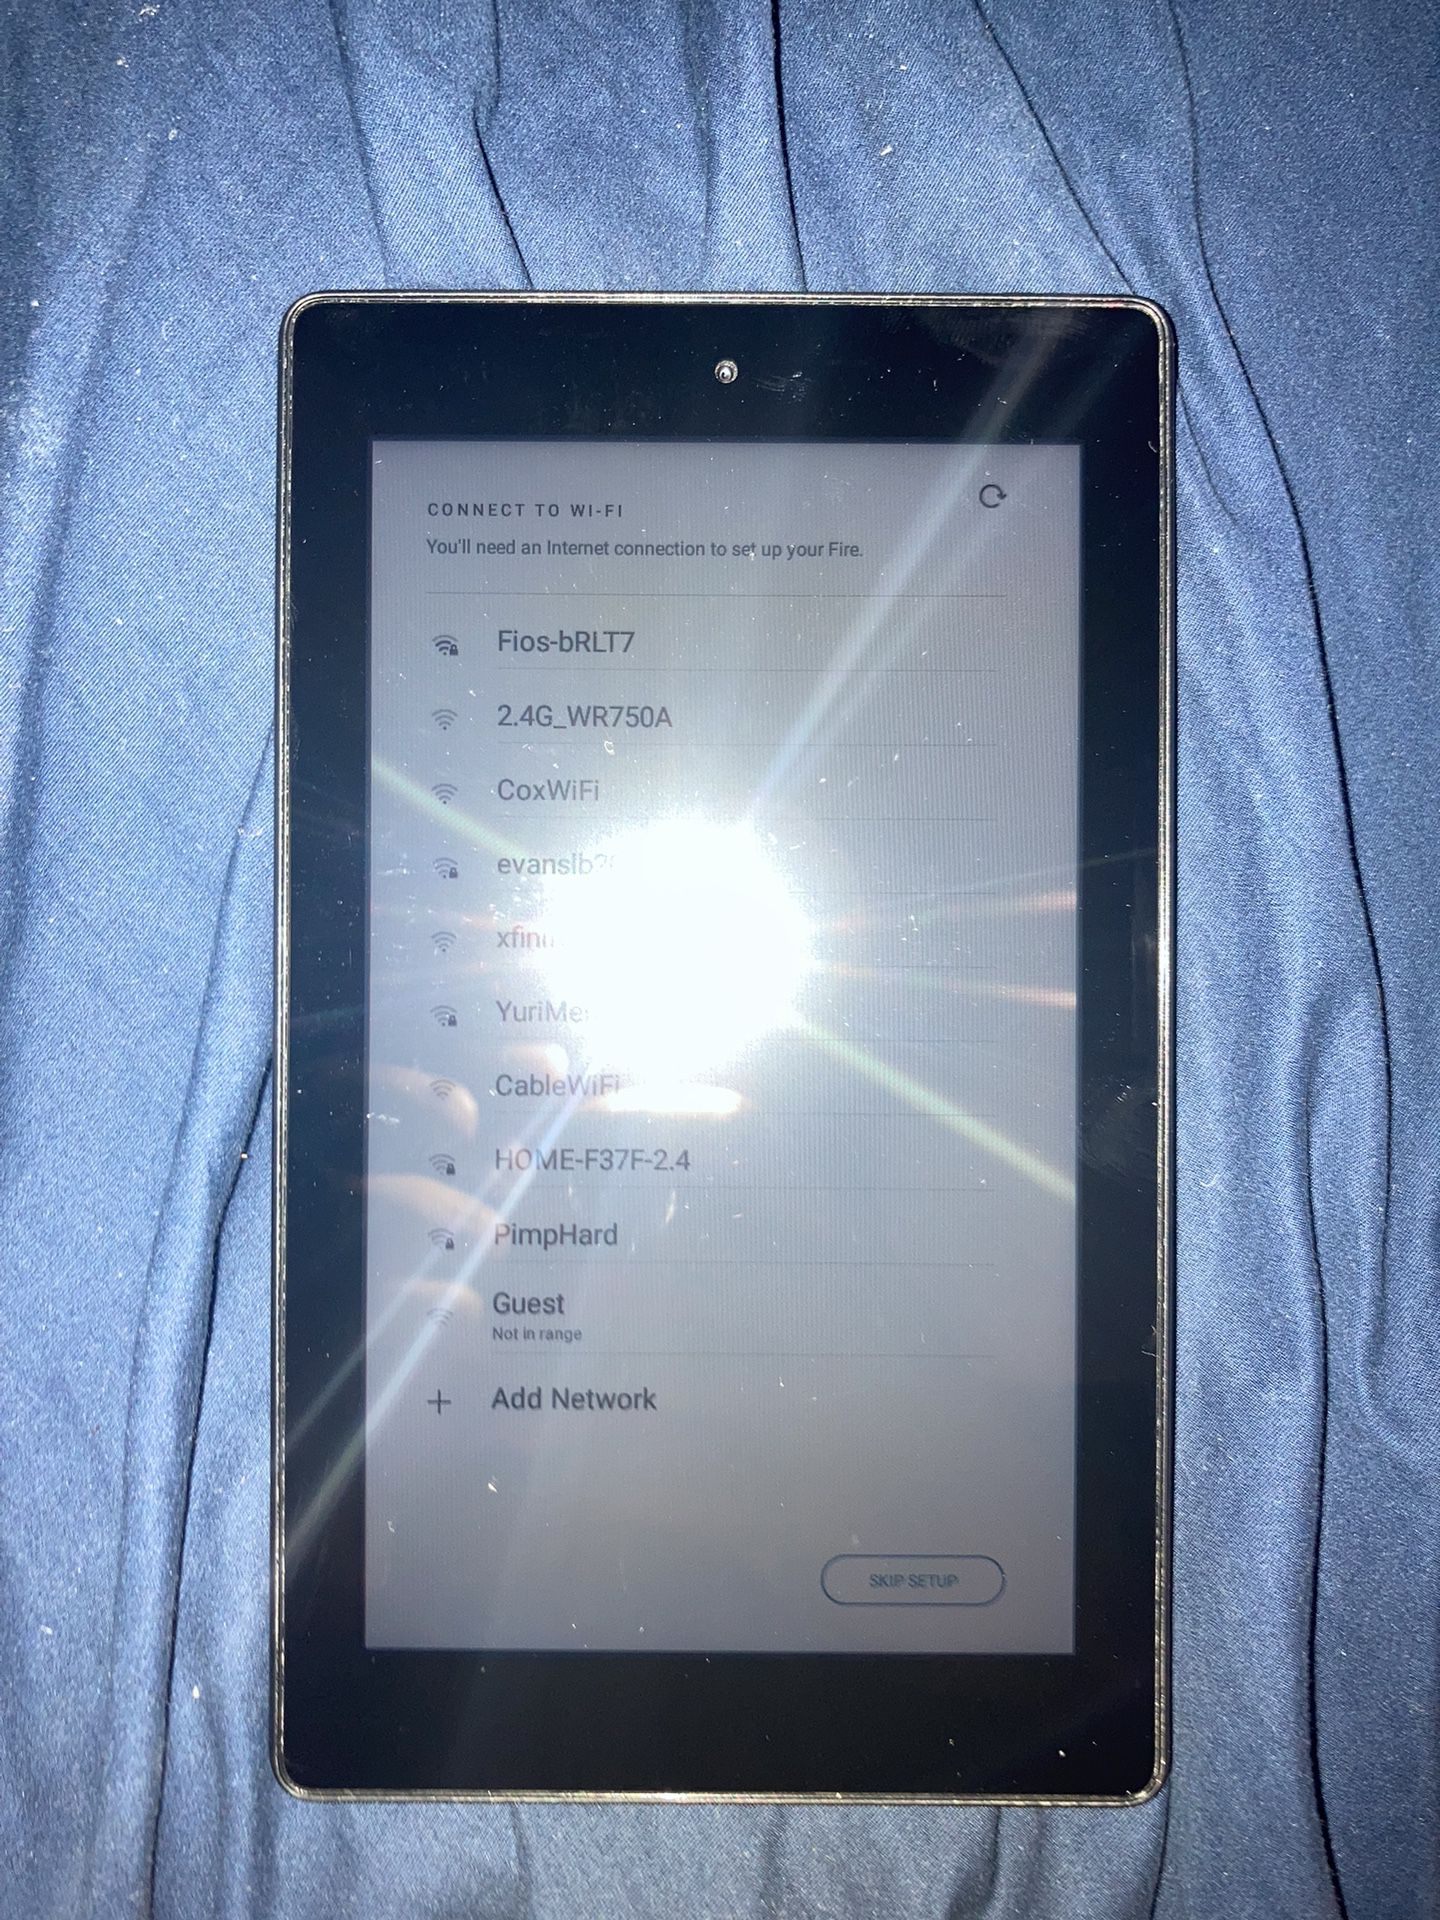 Amazon - Fire 7 Tablet (7" display, 16 GB) - Black